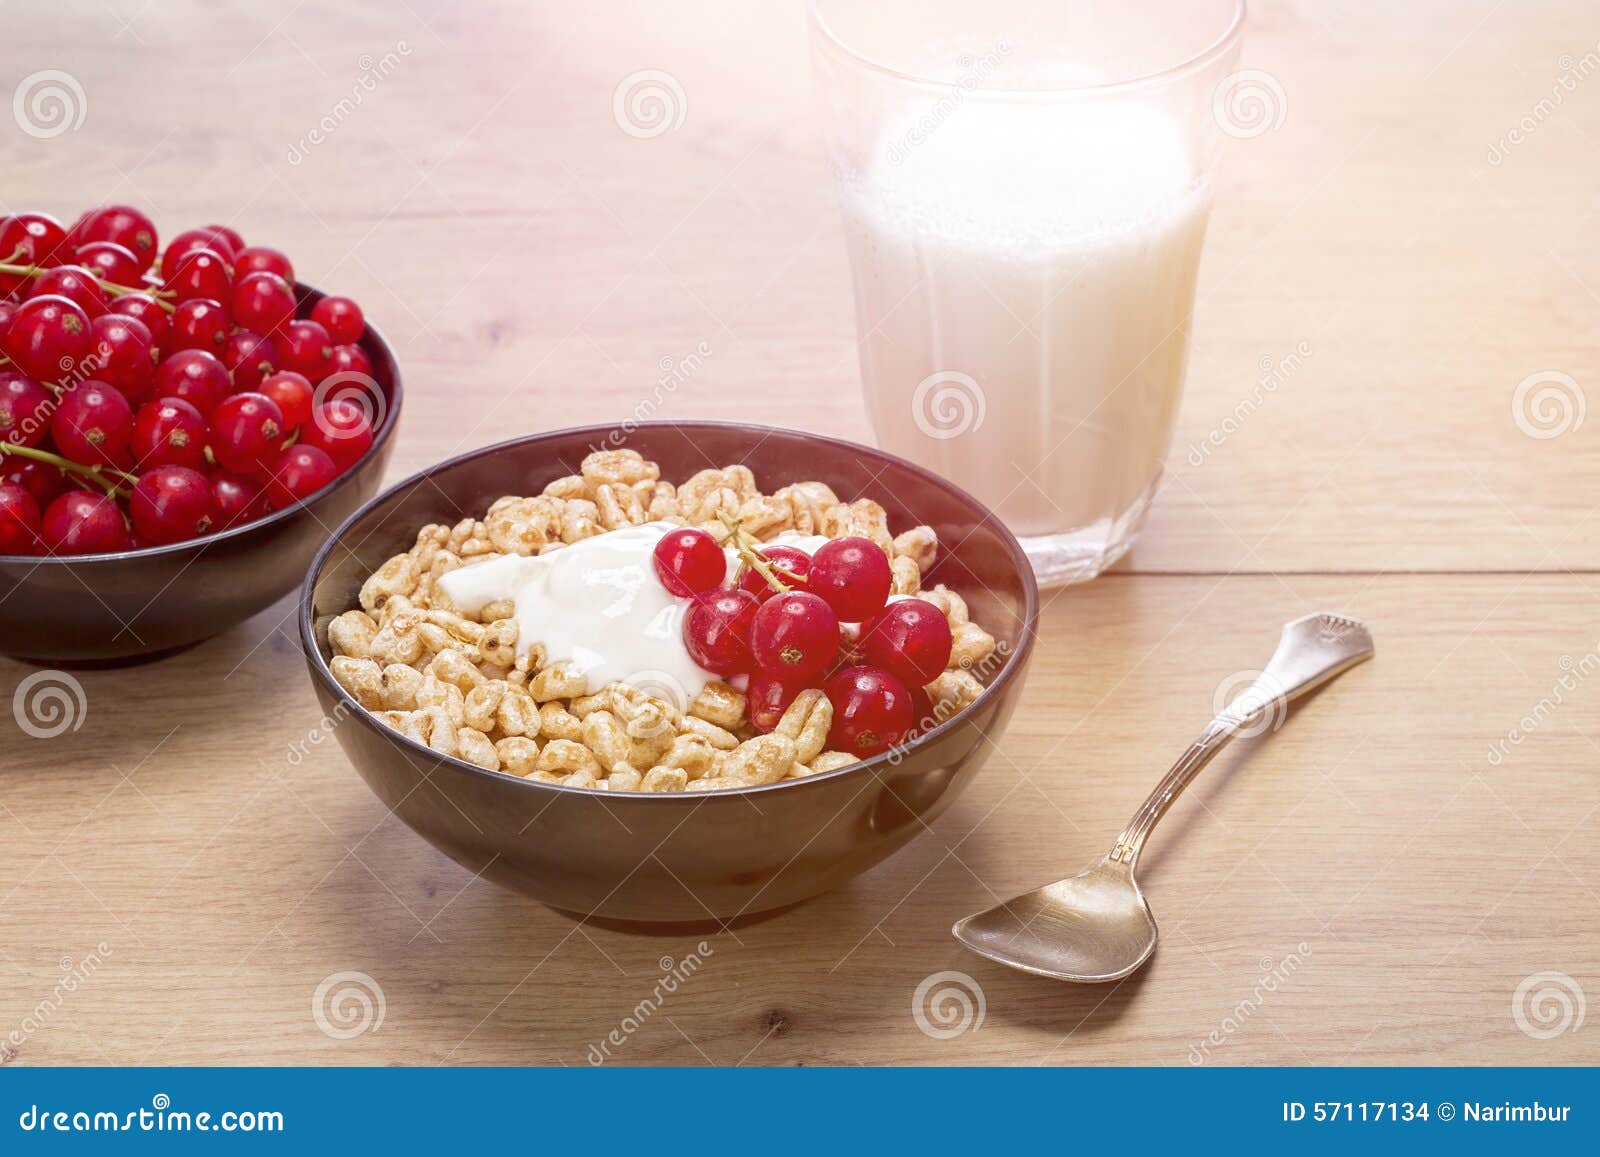 breakfast stilllife with cereals